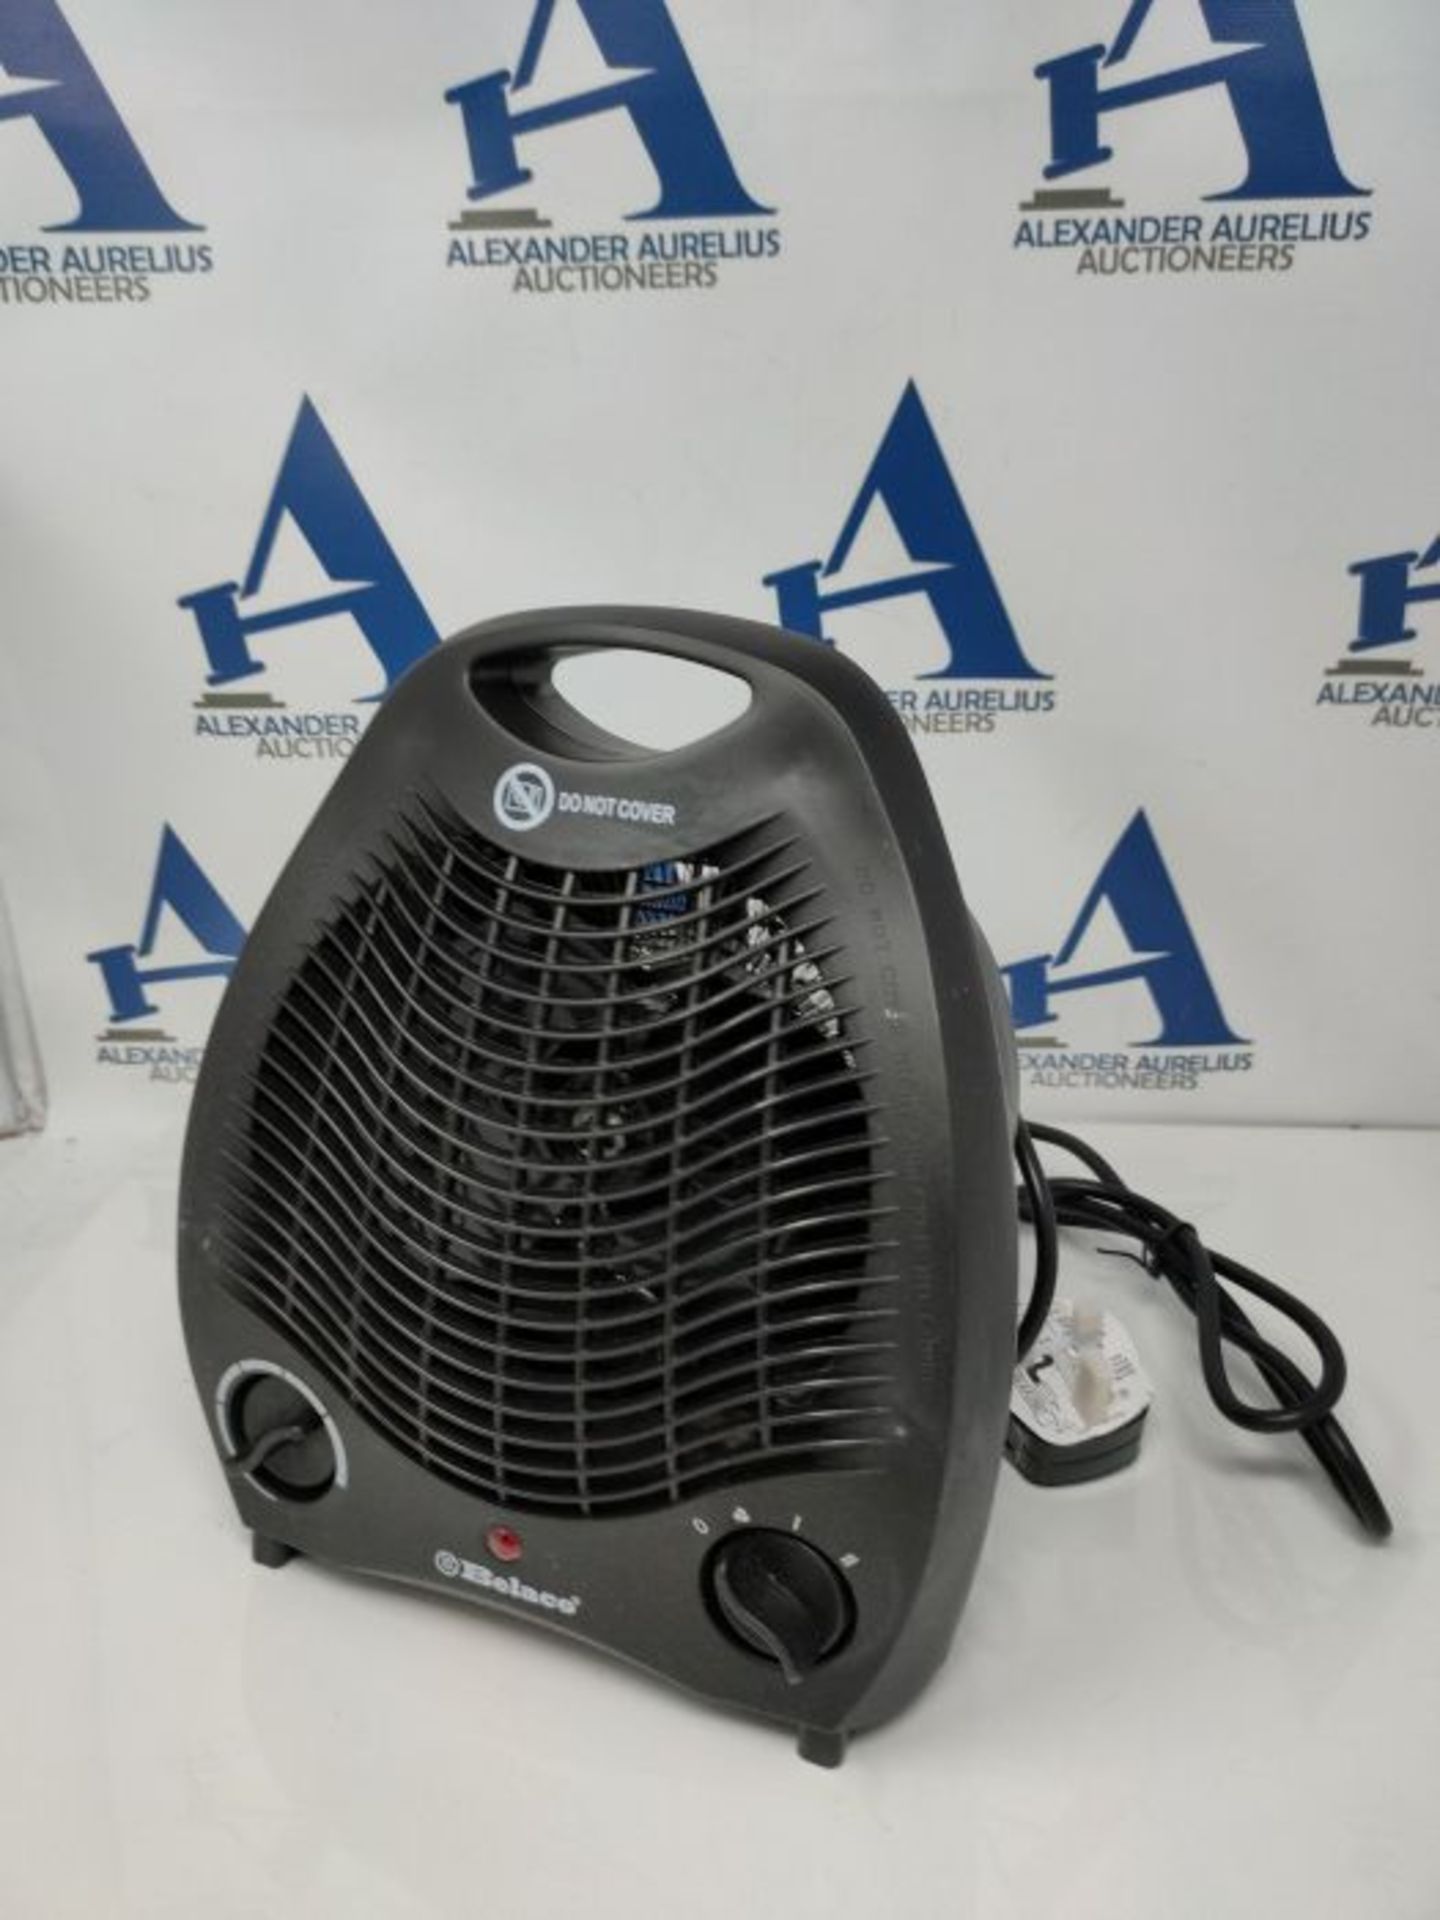 Belaco Fan Heater 2 Heat Settings 1000/2000W Electric Heaters Overheat Protection BFH2 - Image 5 of 6